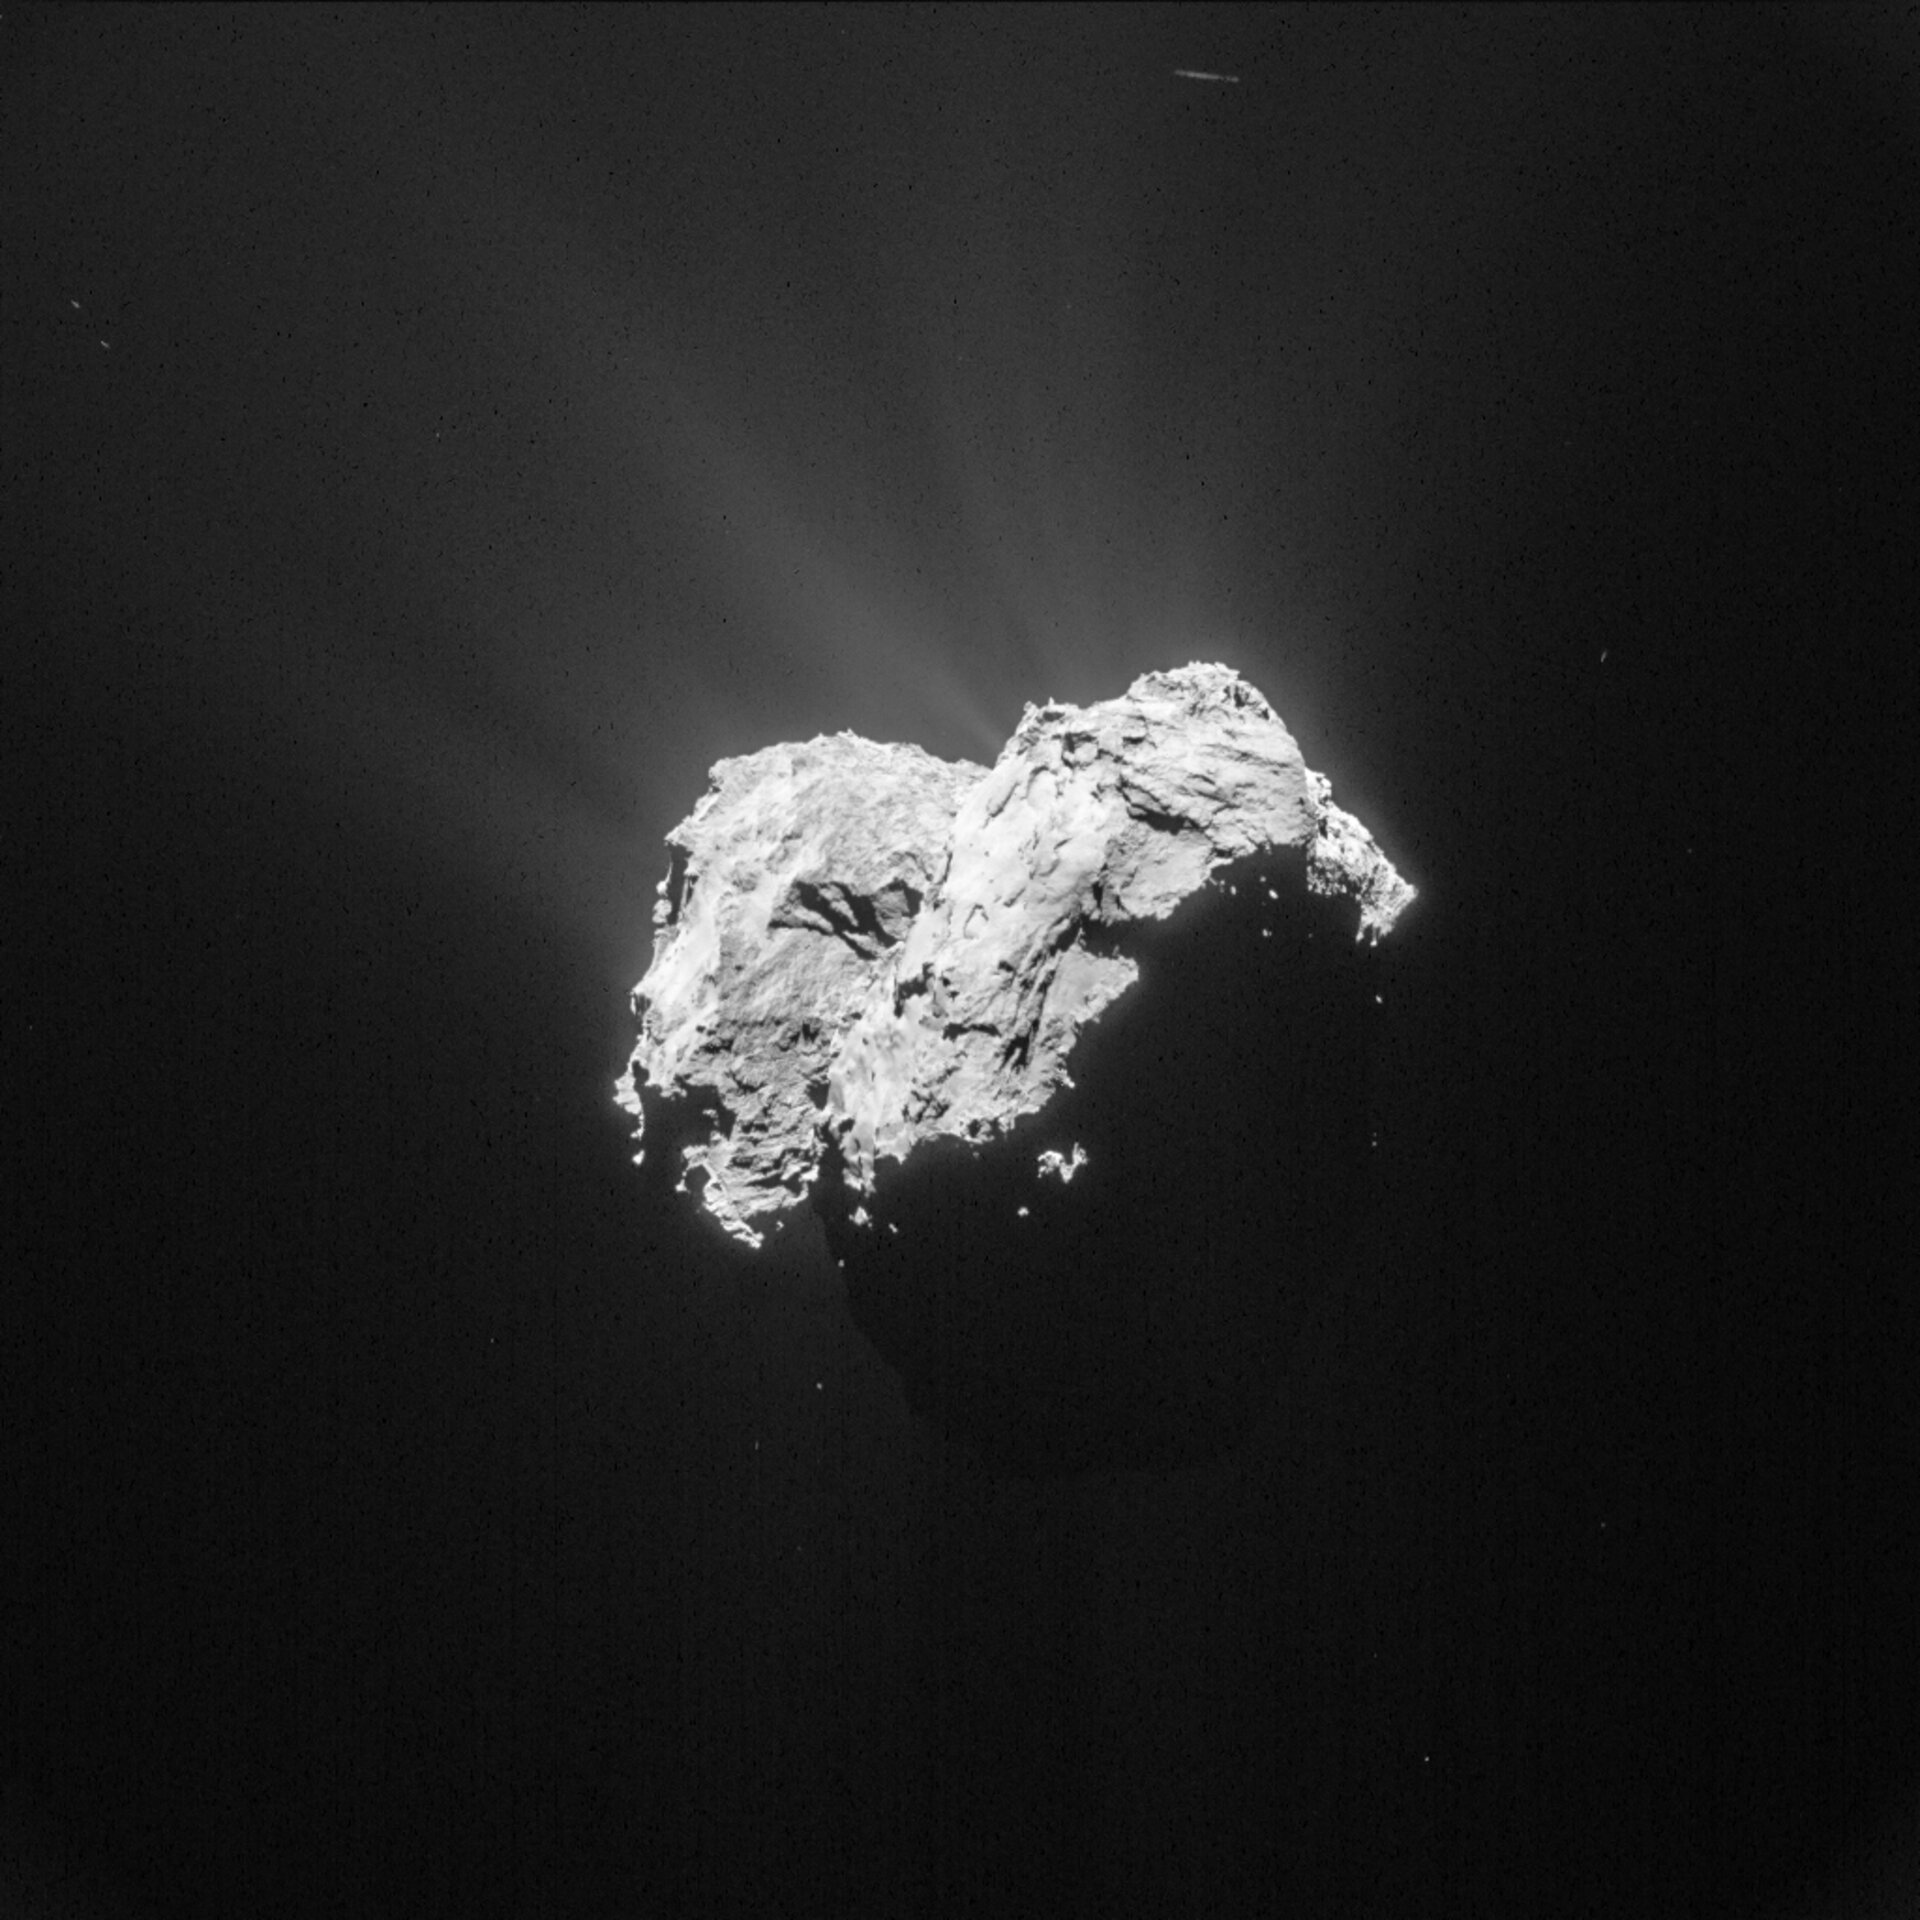 Comet on 18 April 2015 – NavCam 